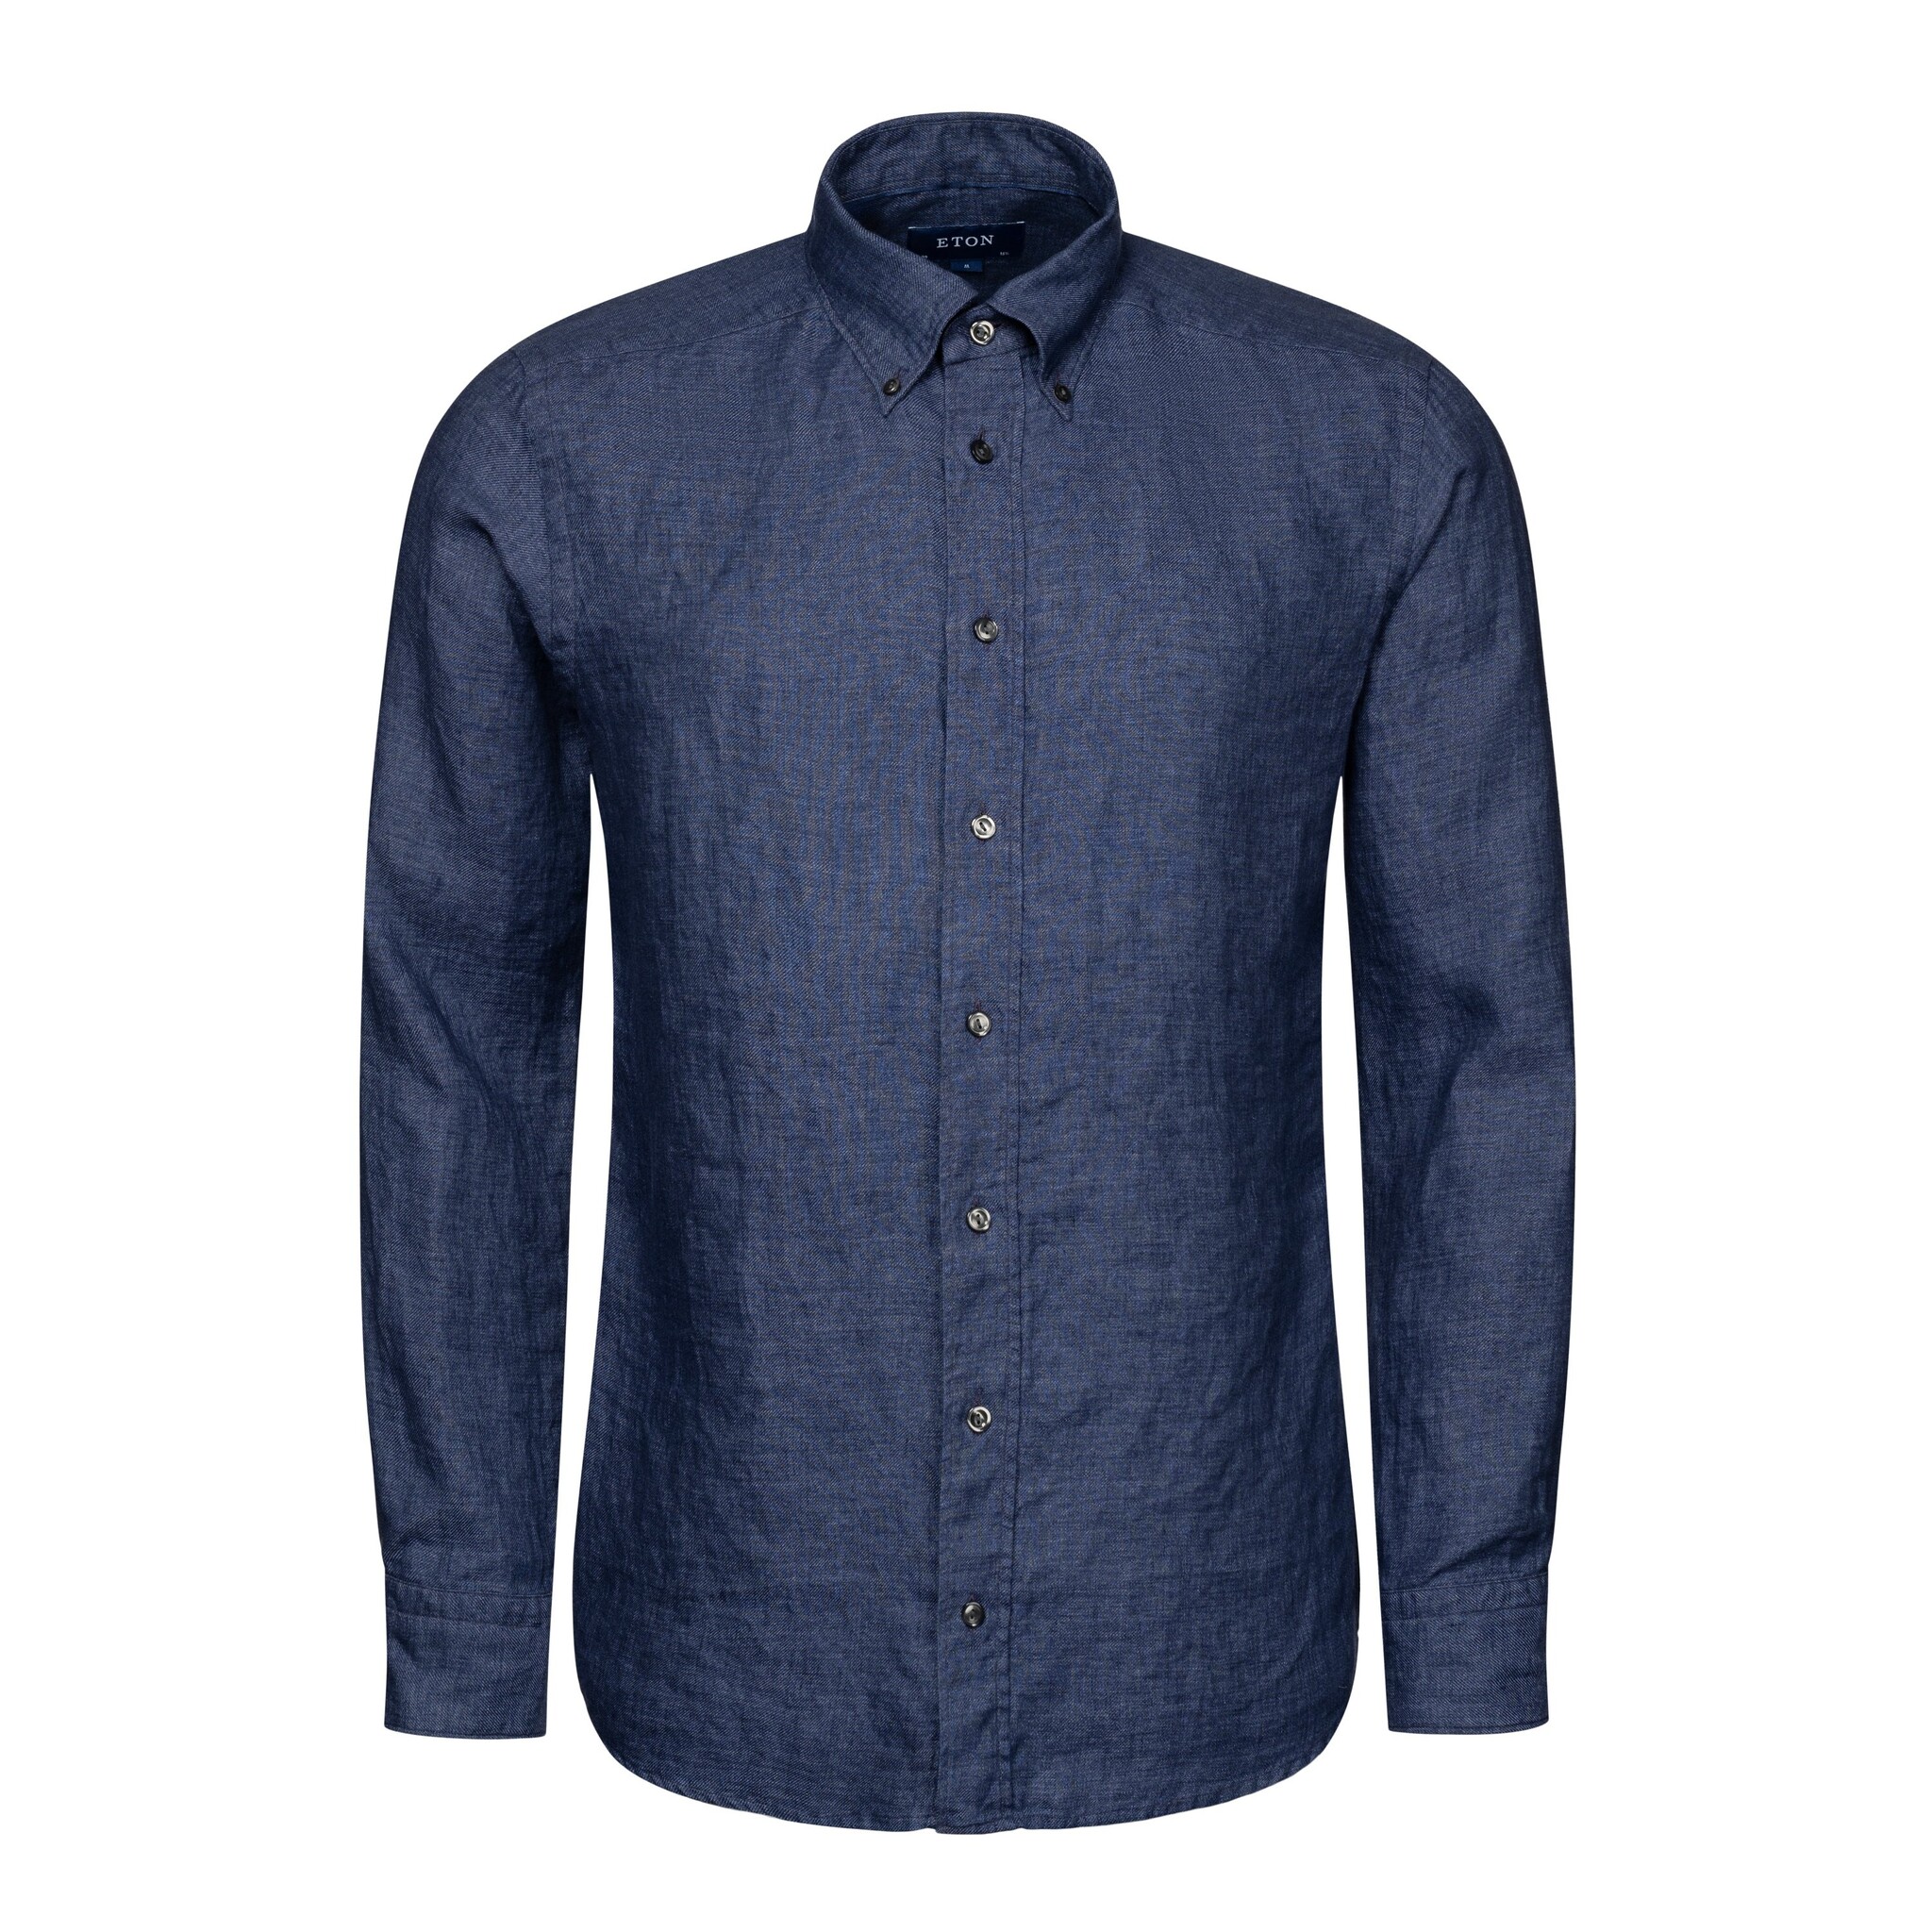 Eton Twill Linen Shirt with button down collar